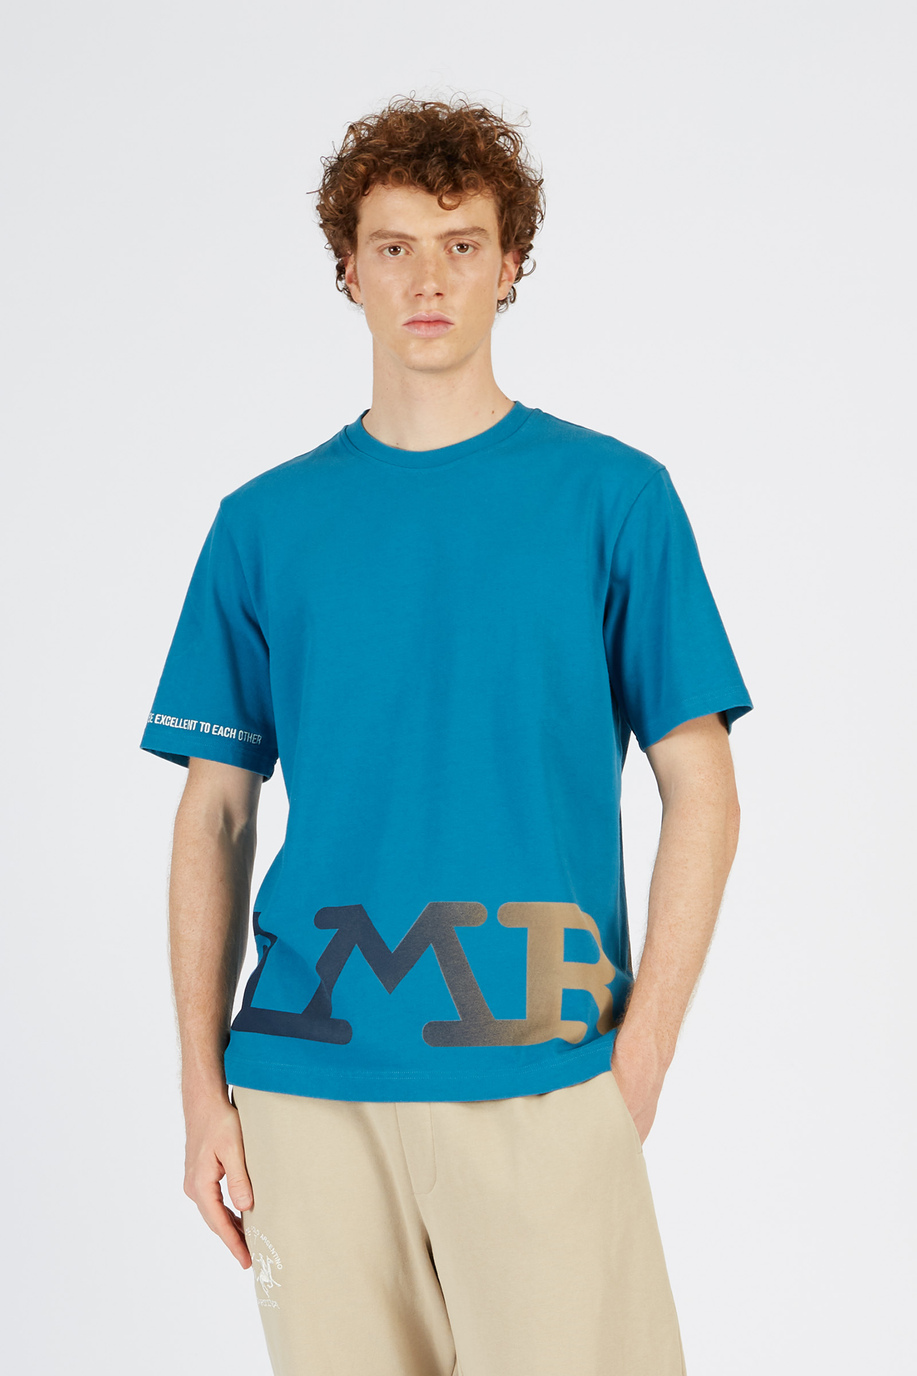 Men’s short-sleeved oversize crew neck t-shirt - LMRTN | La Martina - Official Online Shop